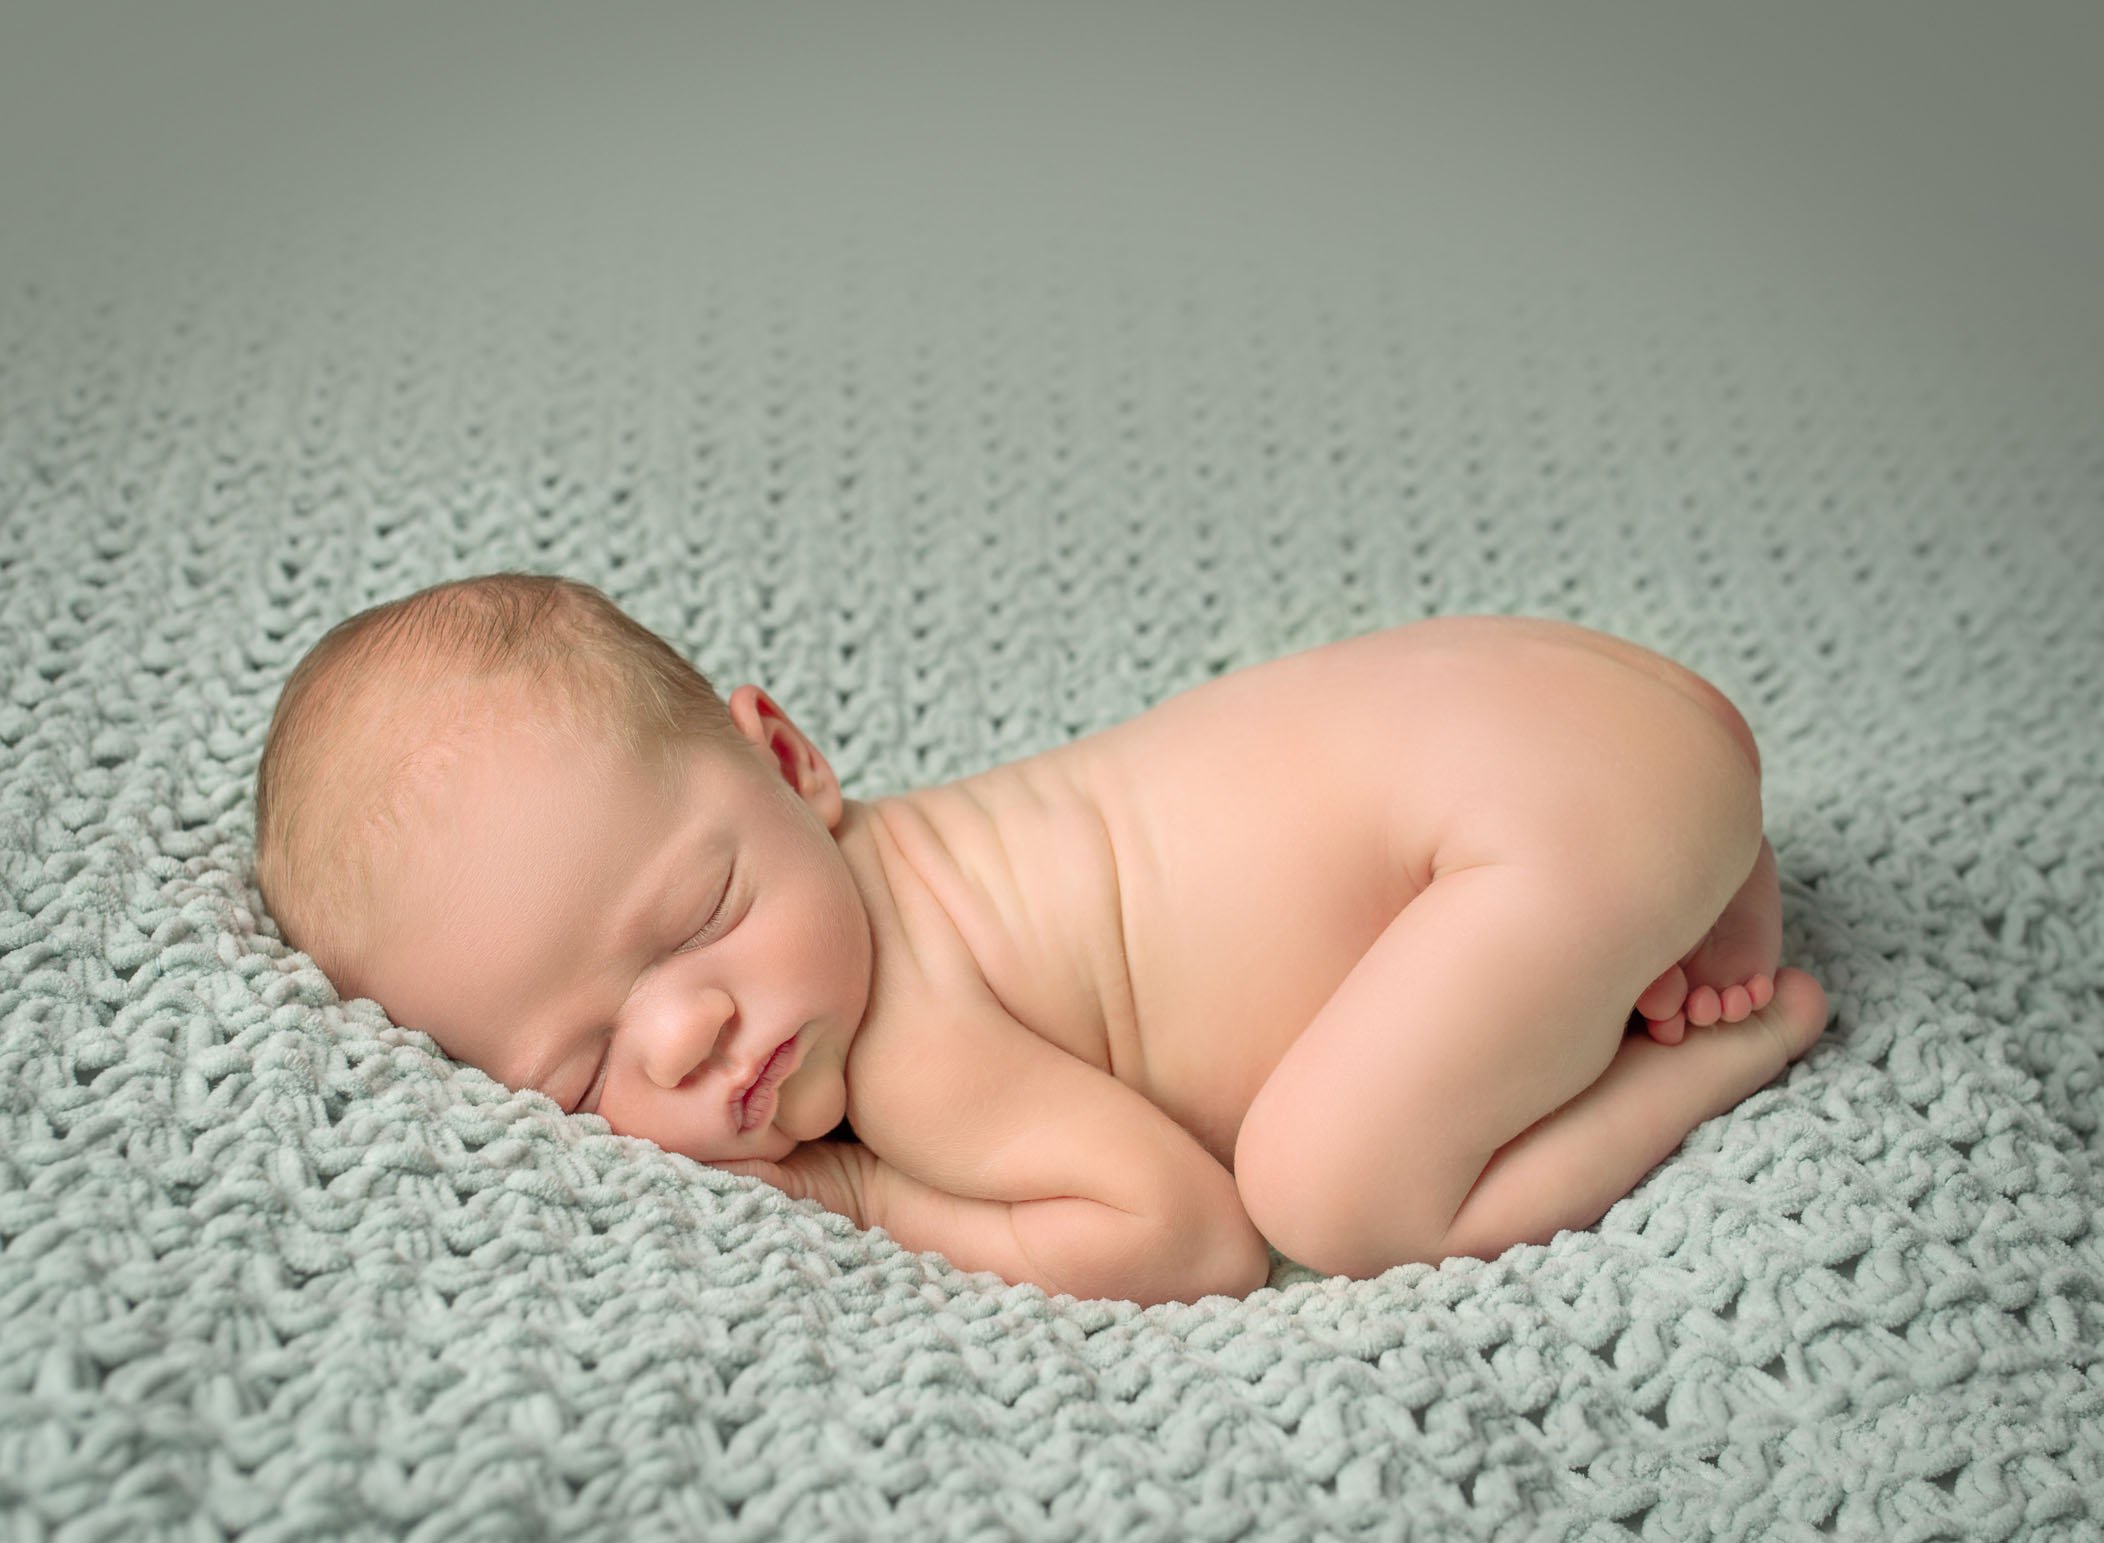 Newborn baby photo sleeping on mint green blanket in bum up pose